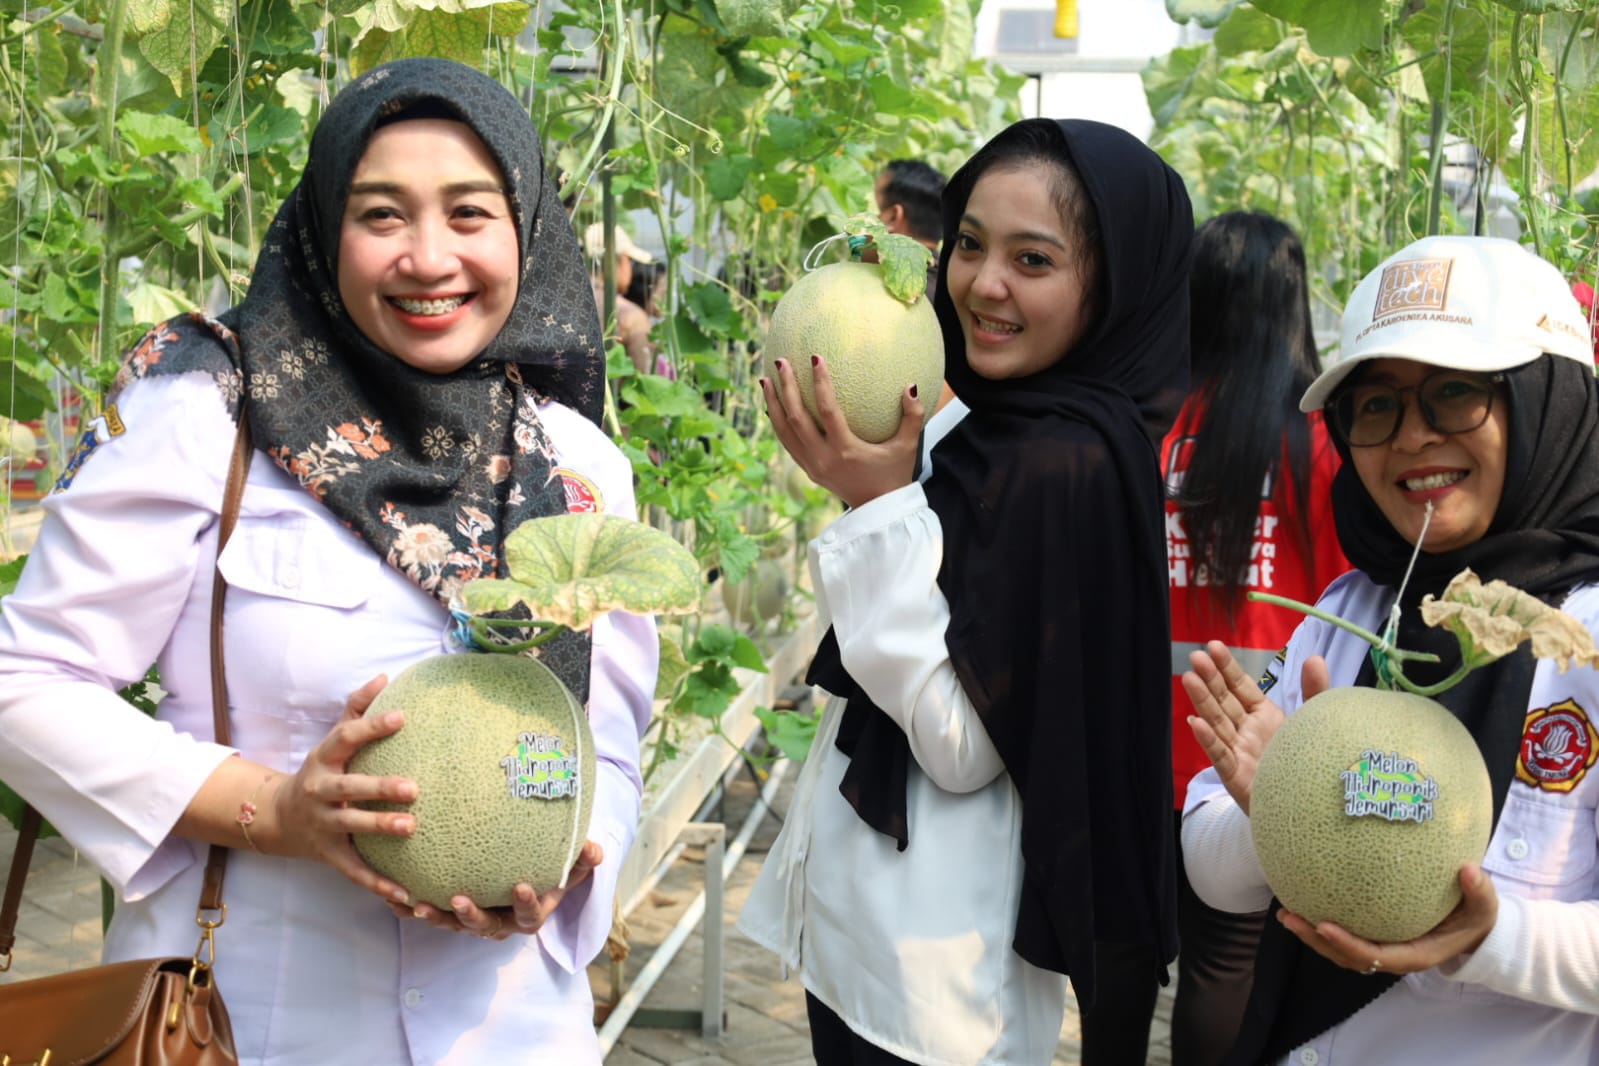 Urban Farming Melon di Lahan Fasum Berbuah Manis, Poktan Jemurwonosari Panen 325 Melon